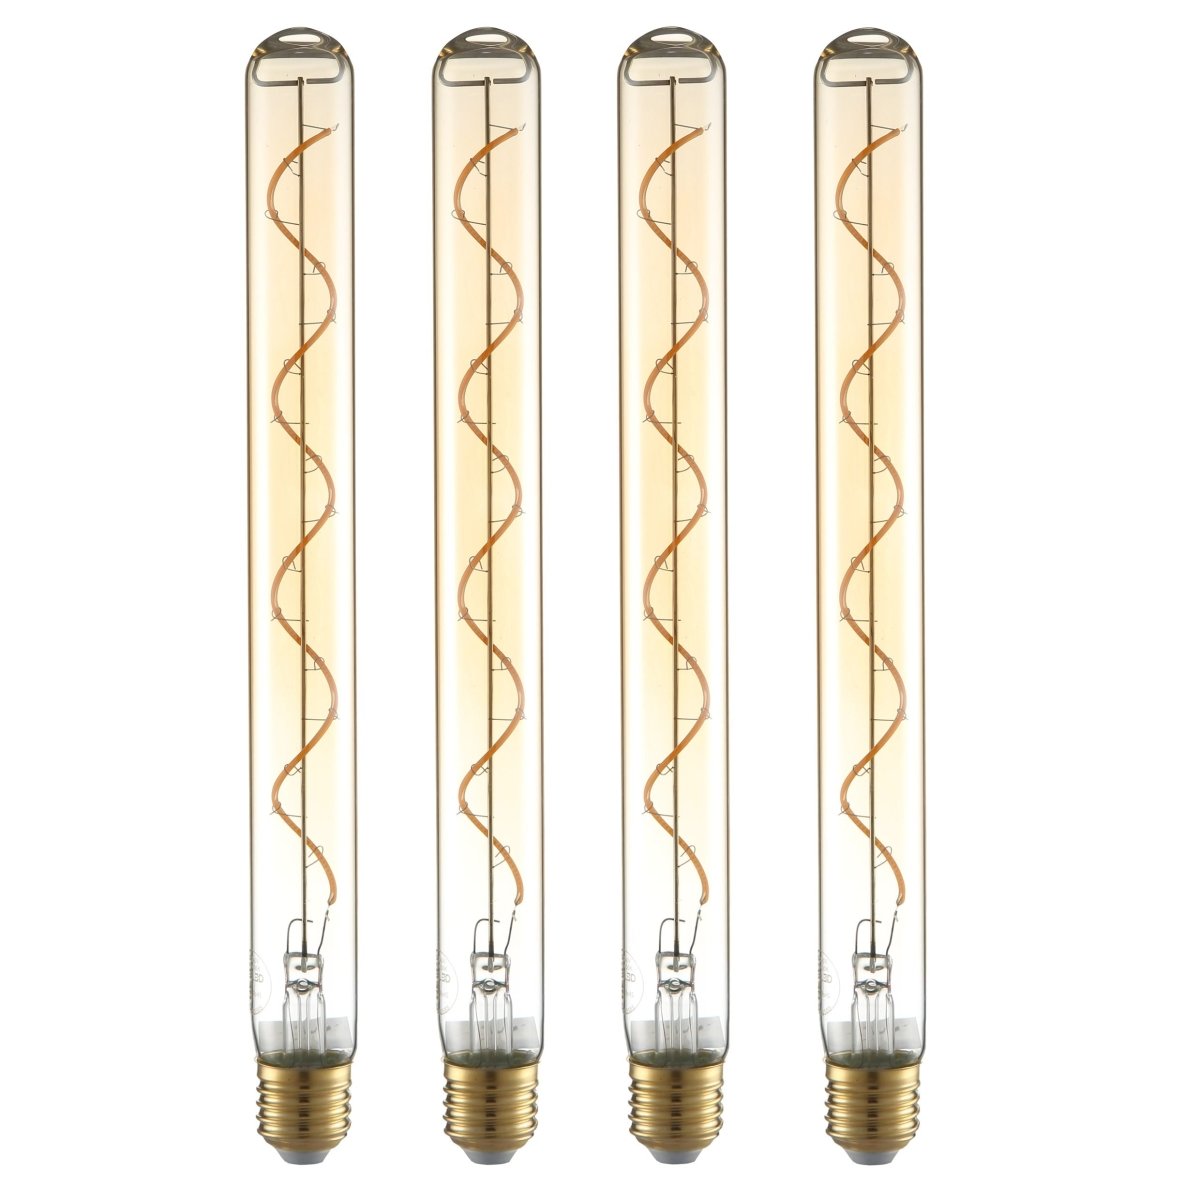 Main image of LED Dimmable Filament Bulb T30 Tubular E27 Edison Screw 4W 240lm 300mm Warm White 2400K Amber Pack of 4 | TEKLED 583-150585